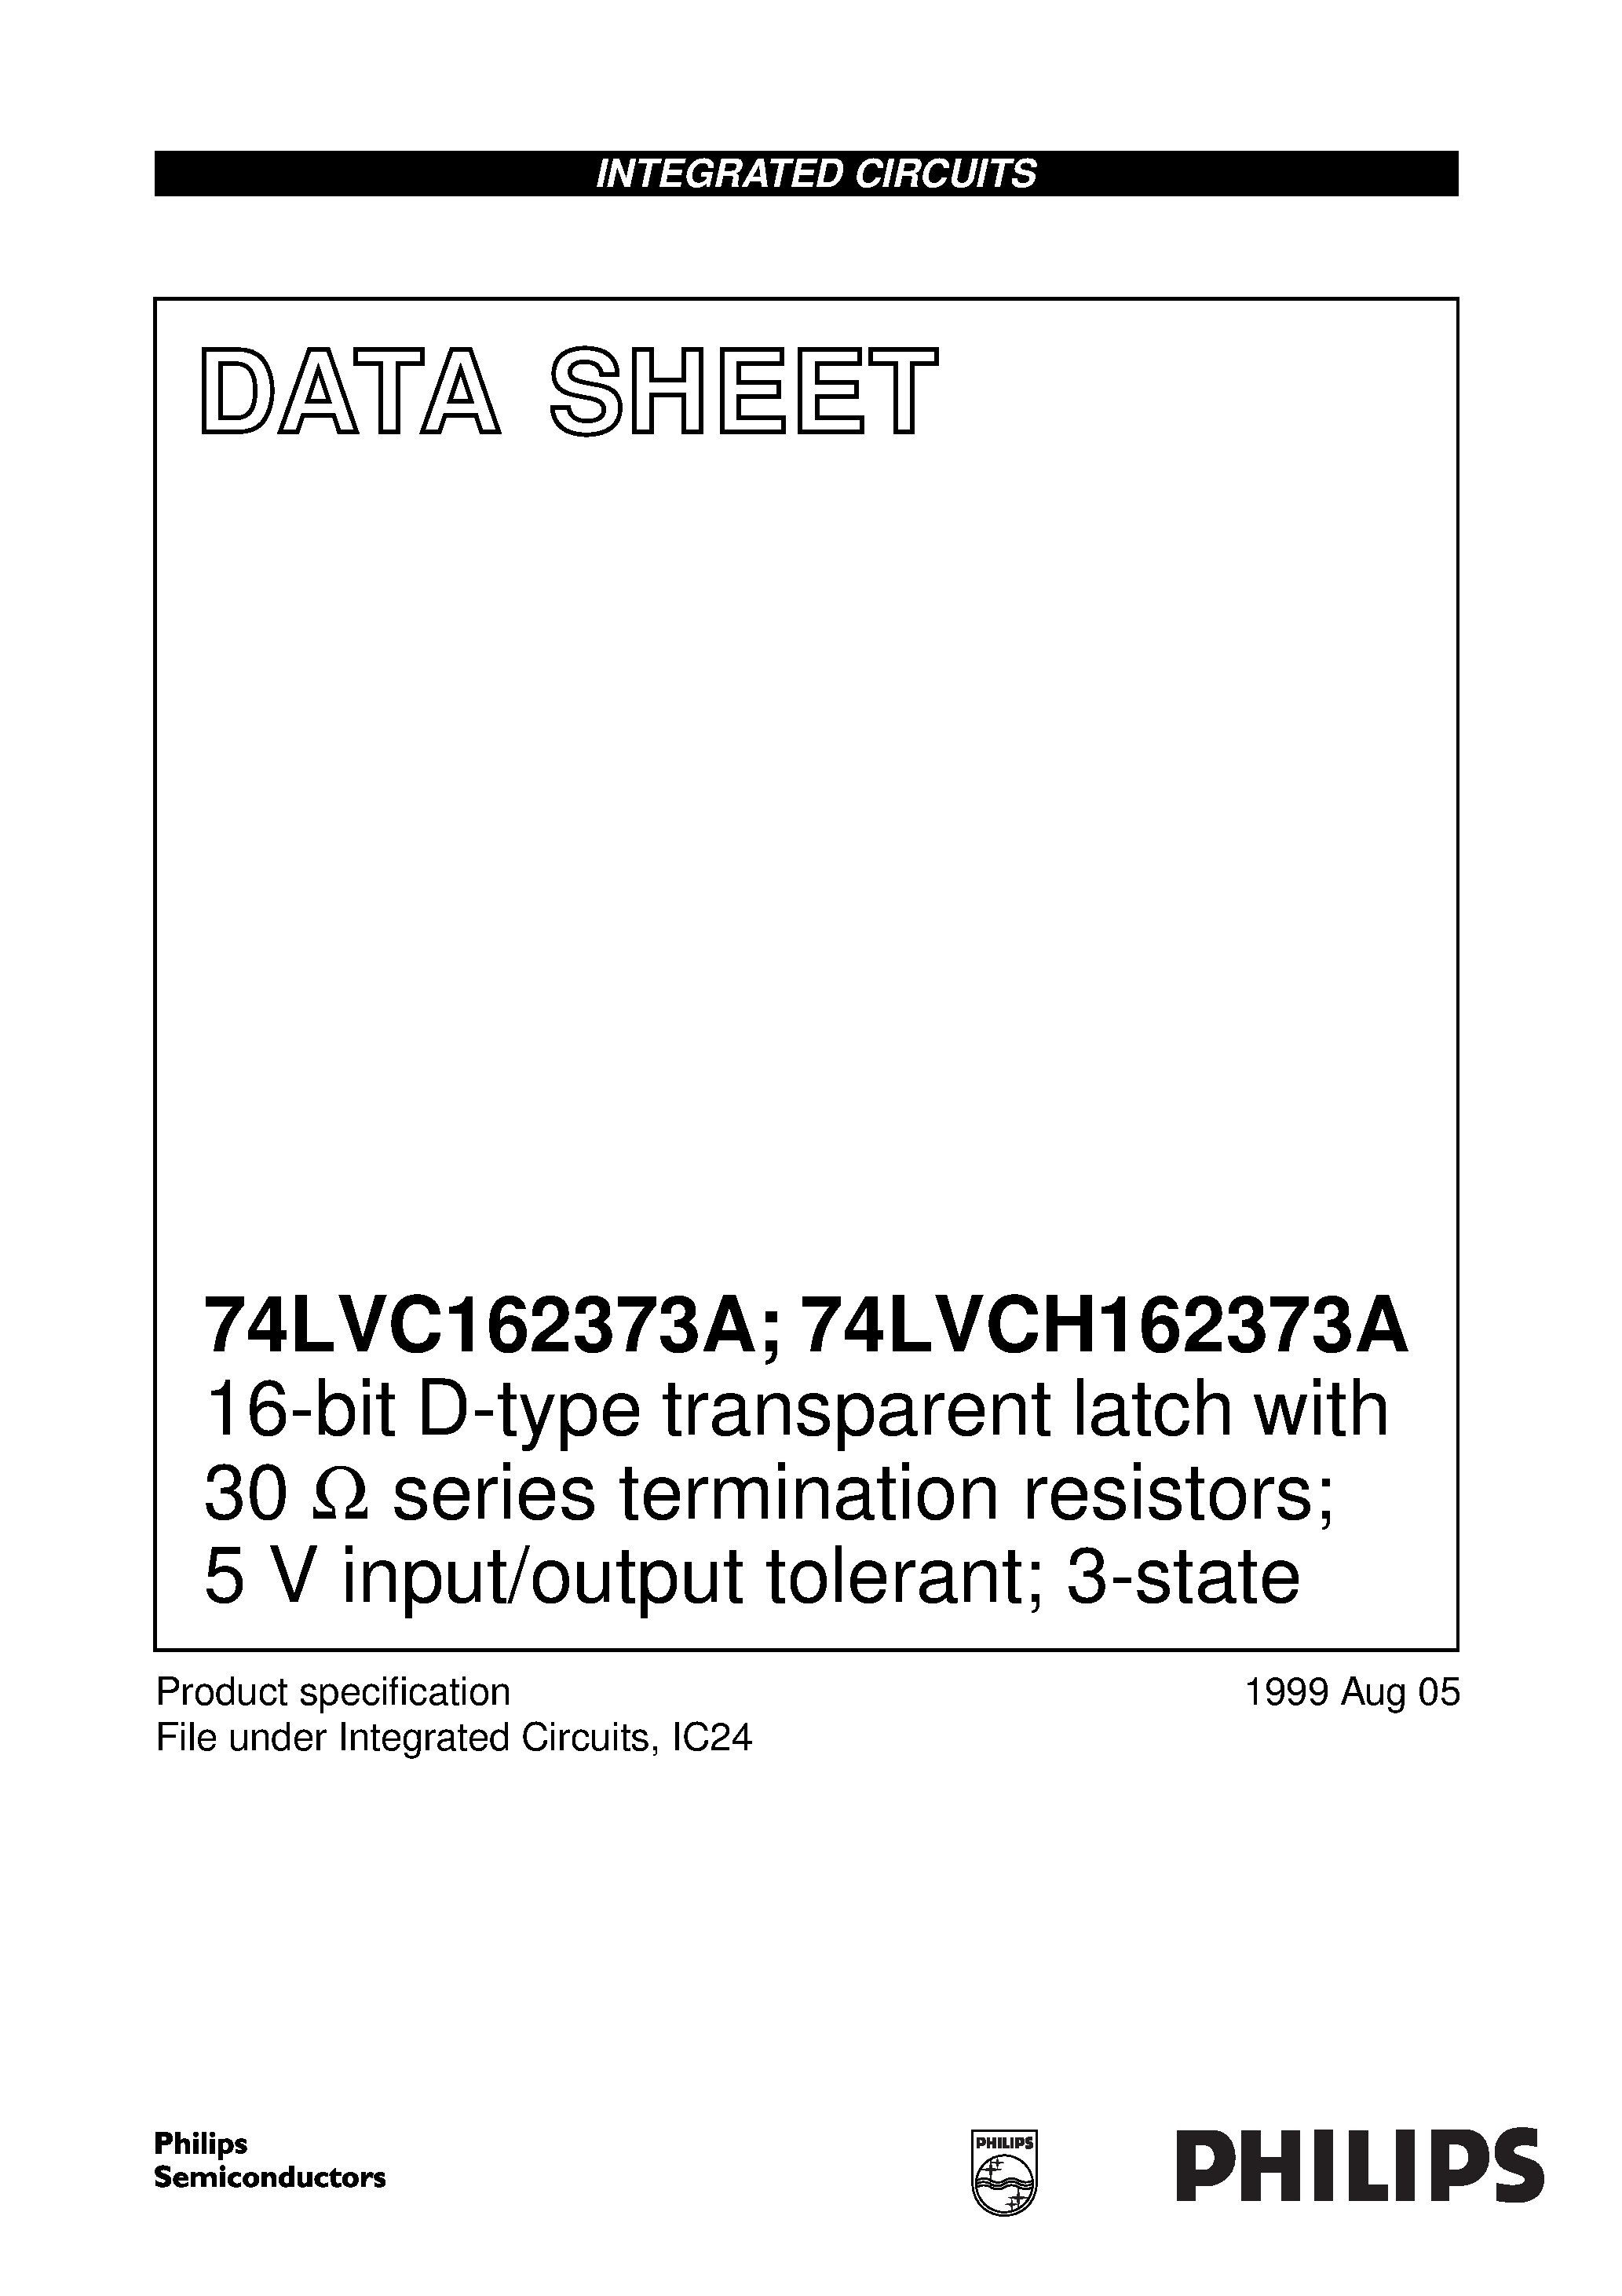 Datasheet VCH162373ADL - 16-bit D-type transparent latch with 30 ohm series termination resistors; 5 V input/output tolerant; 3-state page 1